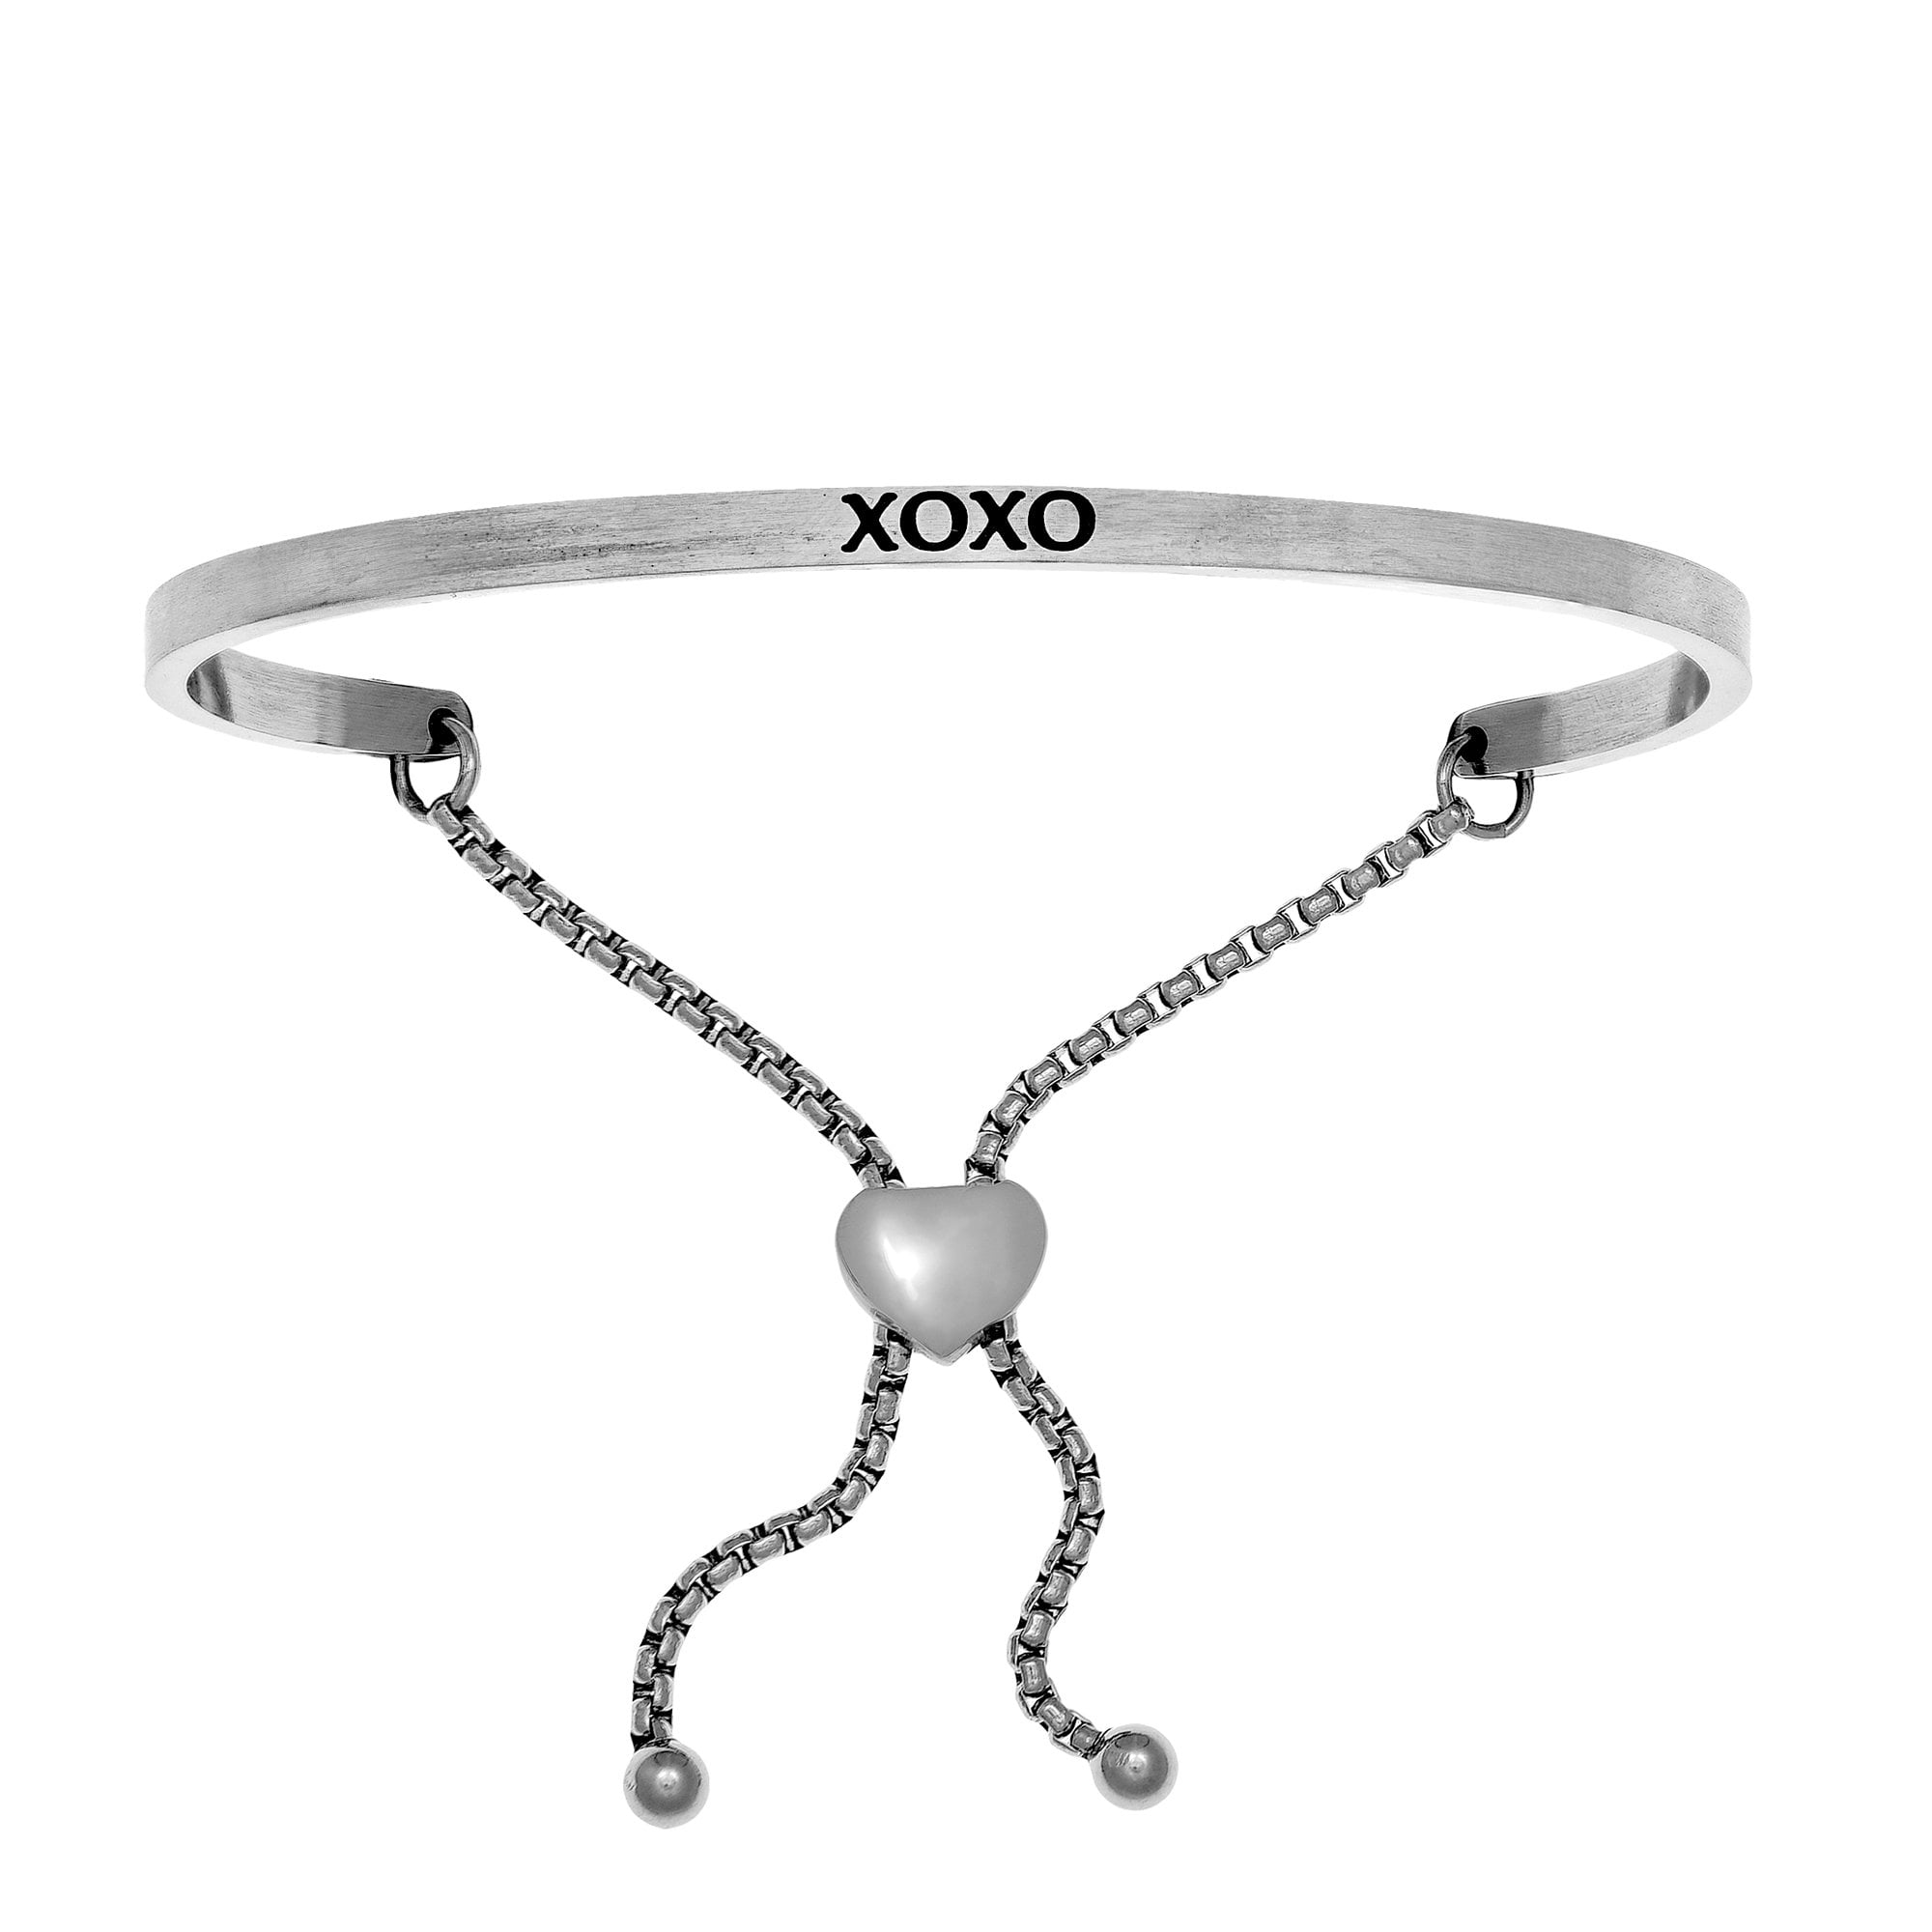 Stainless Steel xoxoadjustable Friendship Bracelet